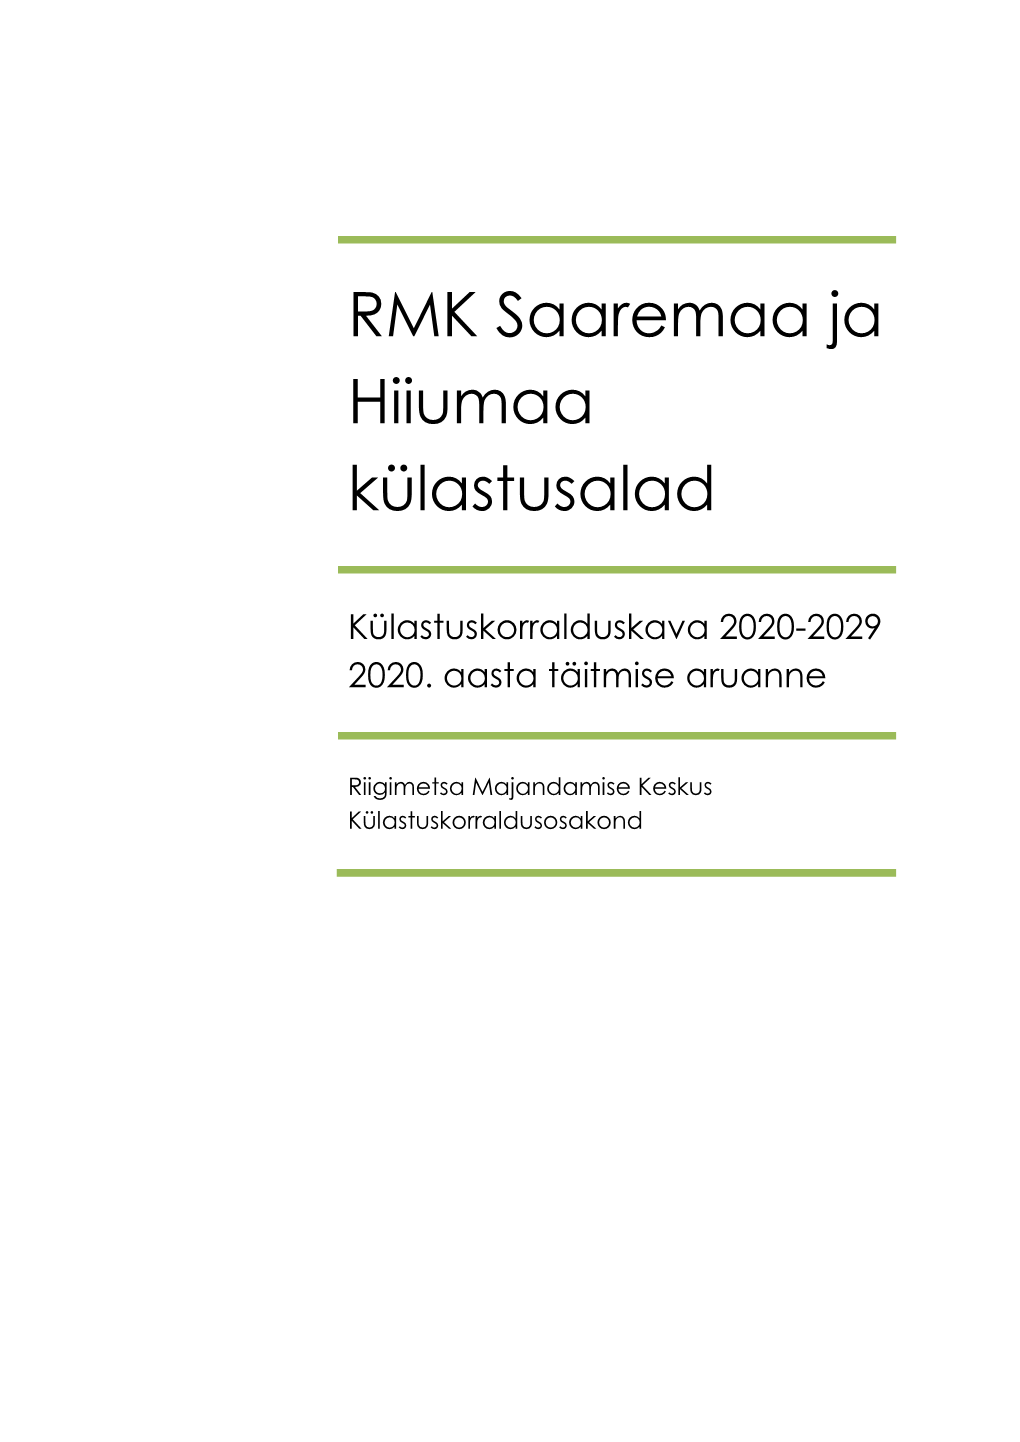 RMK Saaremaa Ja Hiiumaa Külastusalad